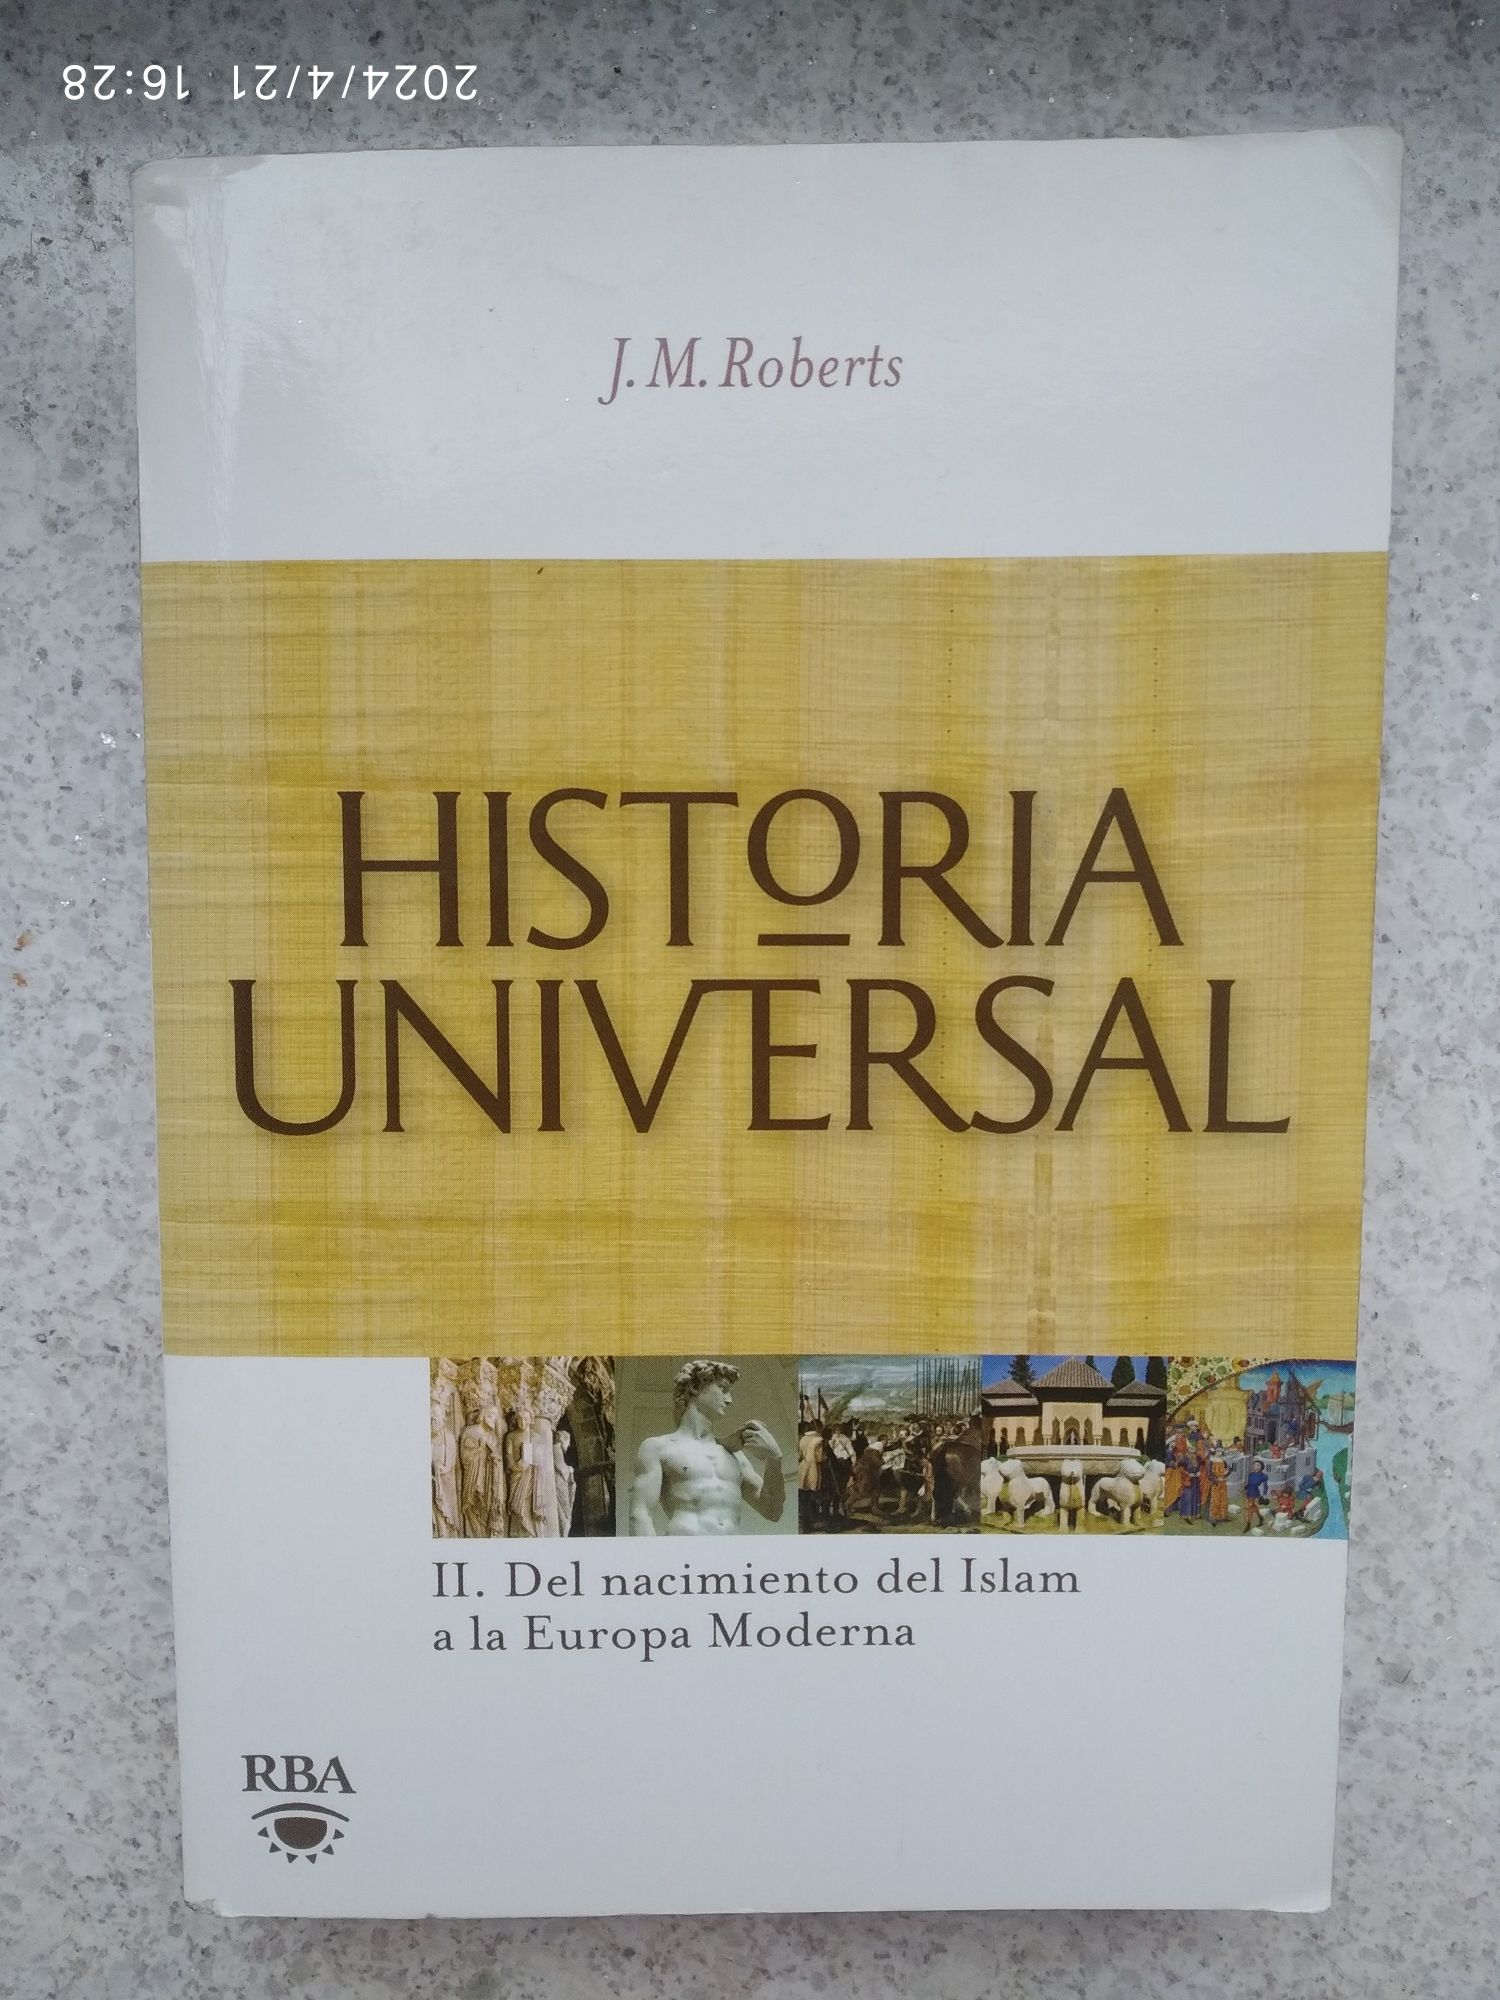 Książka historyczna po hiszpańsku